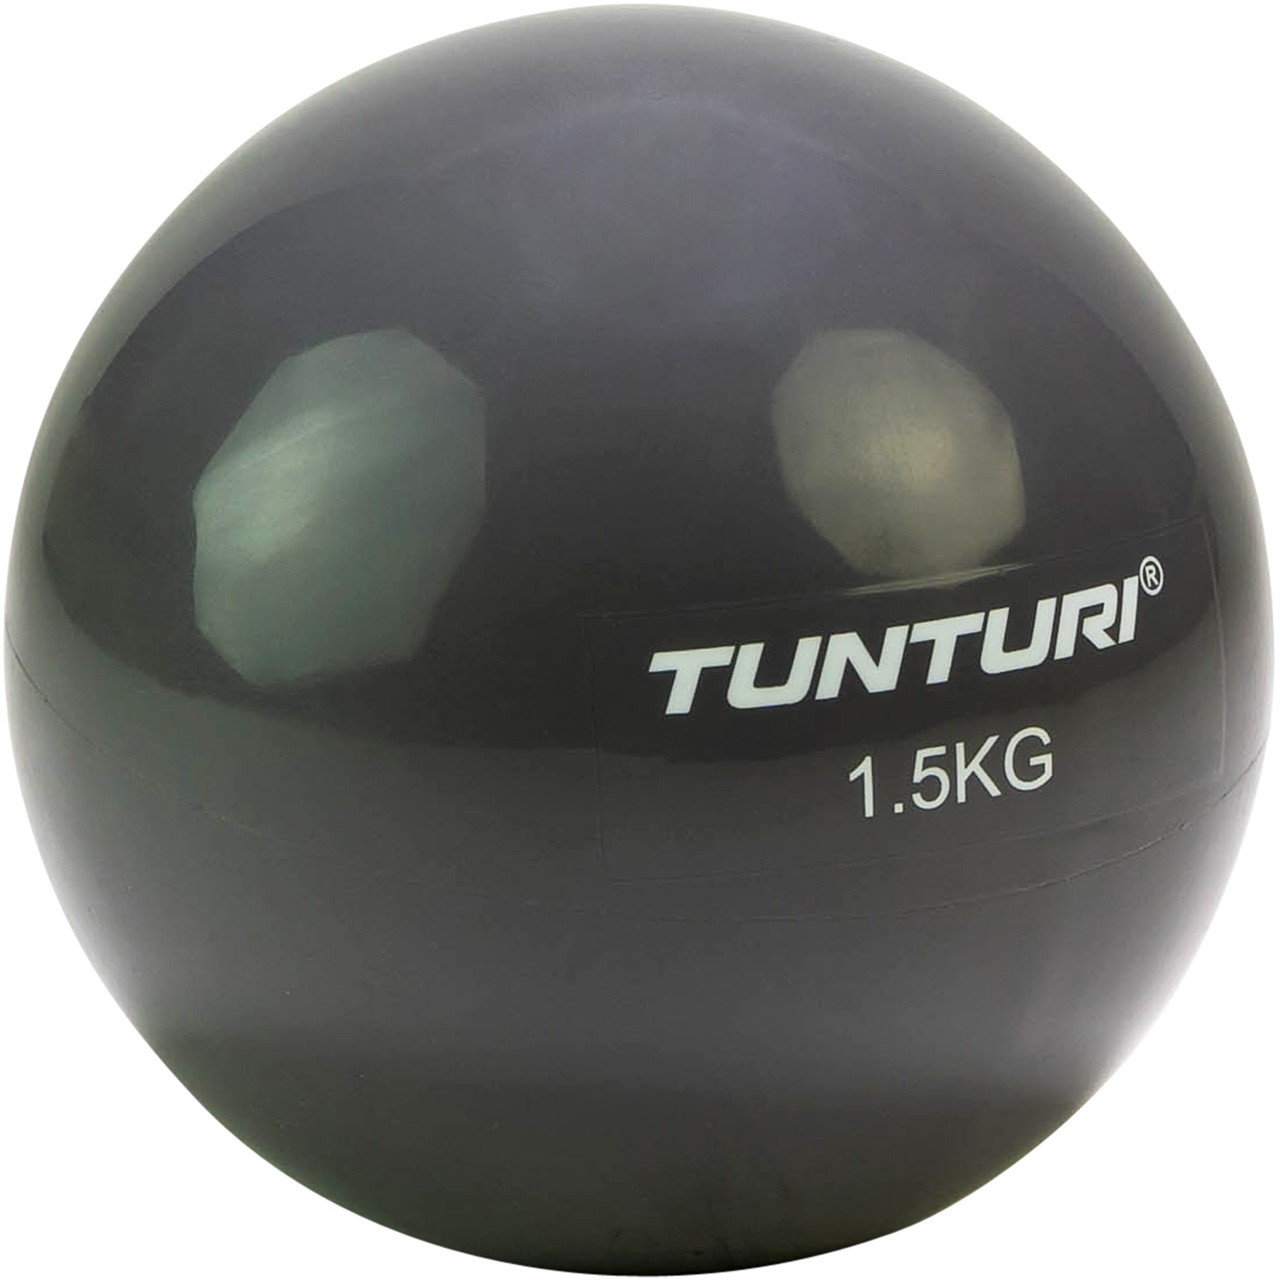 Tunturi Yoga und Pilates Toning Ball 1.5 kg Anthrazit